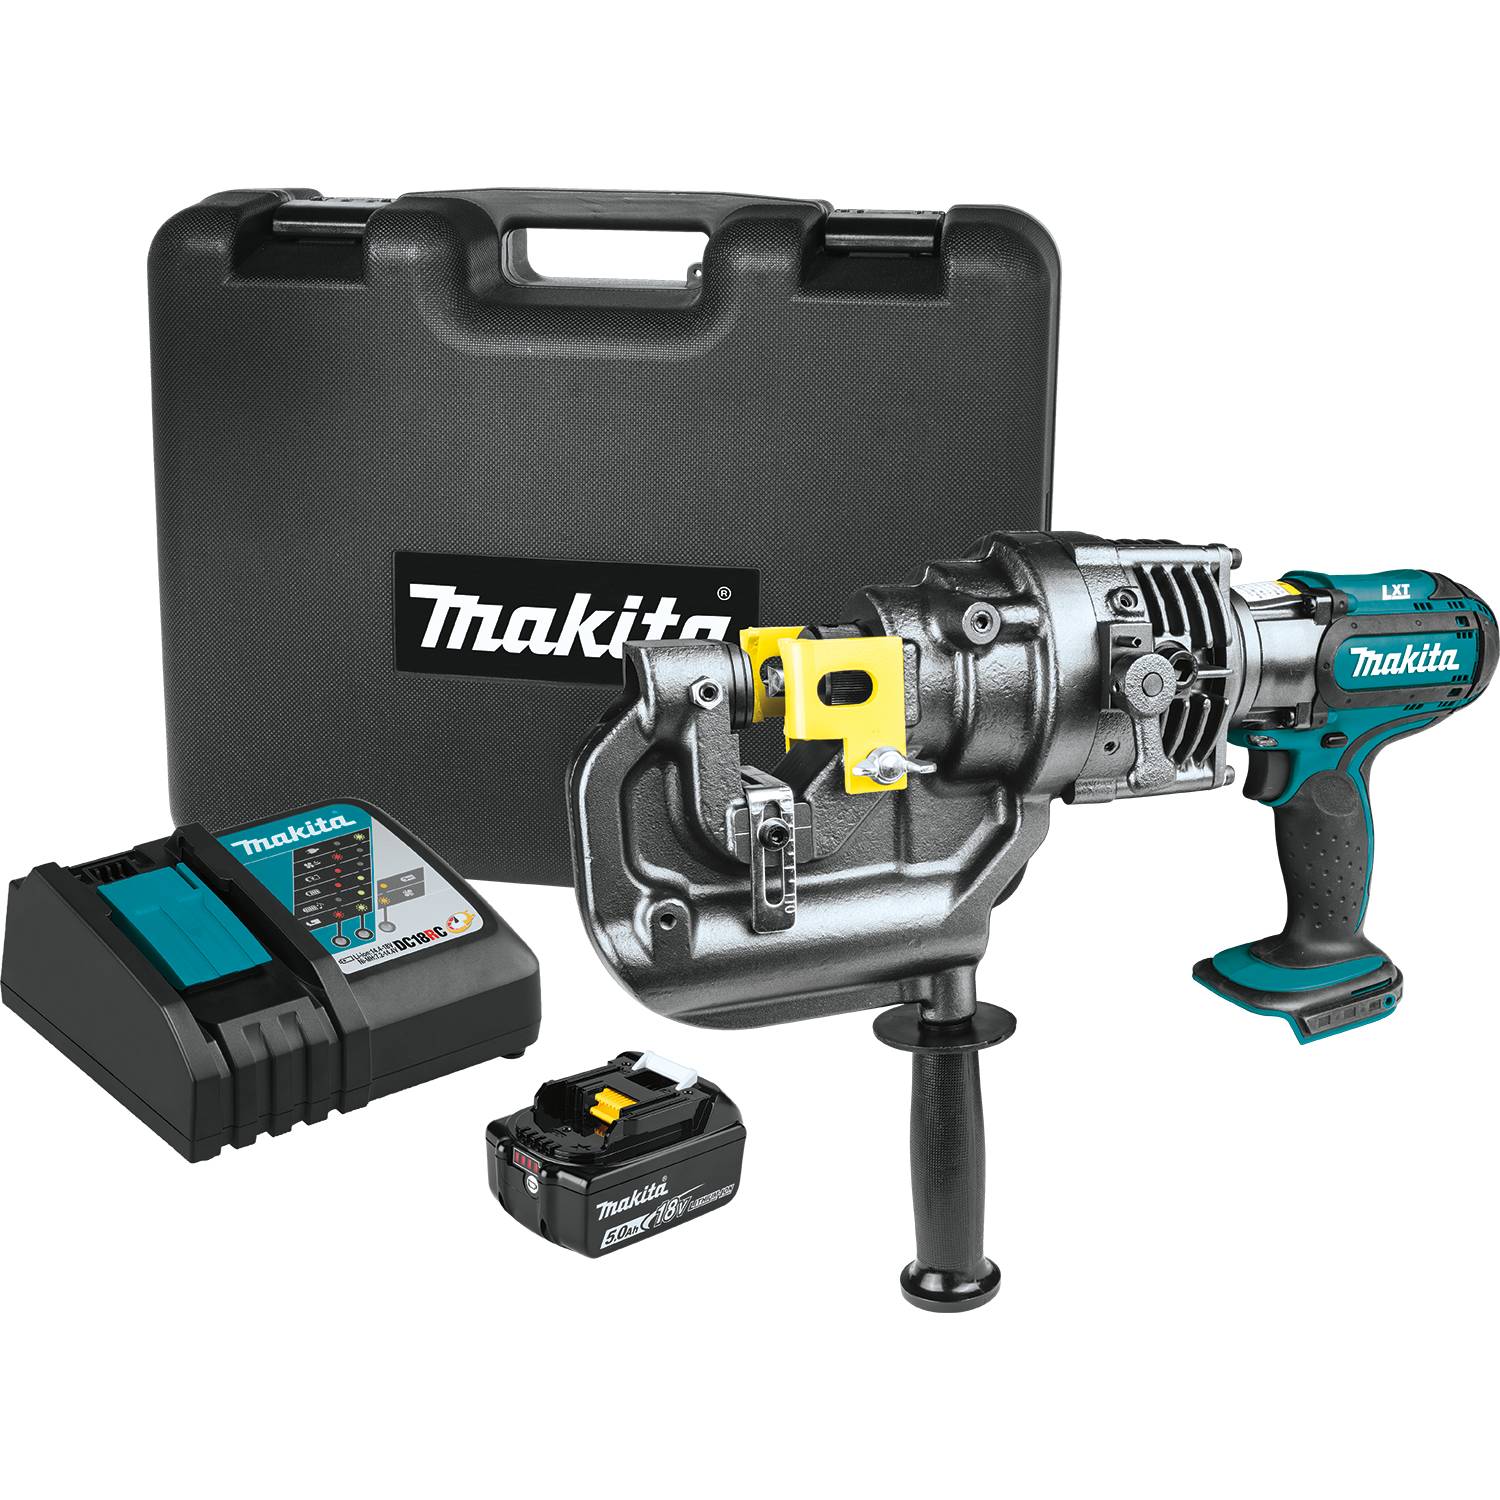 Makita Metal Puncher | Tallman Equipment Company